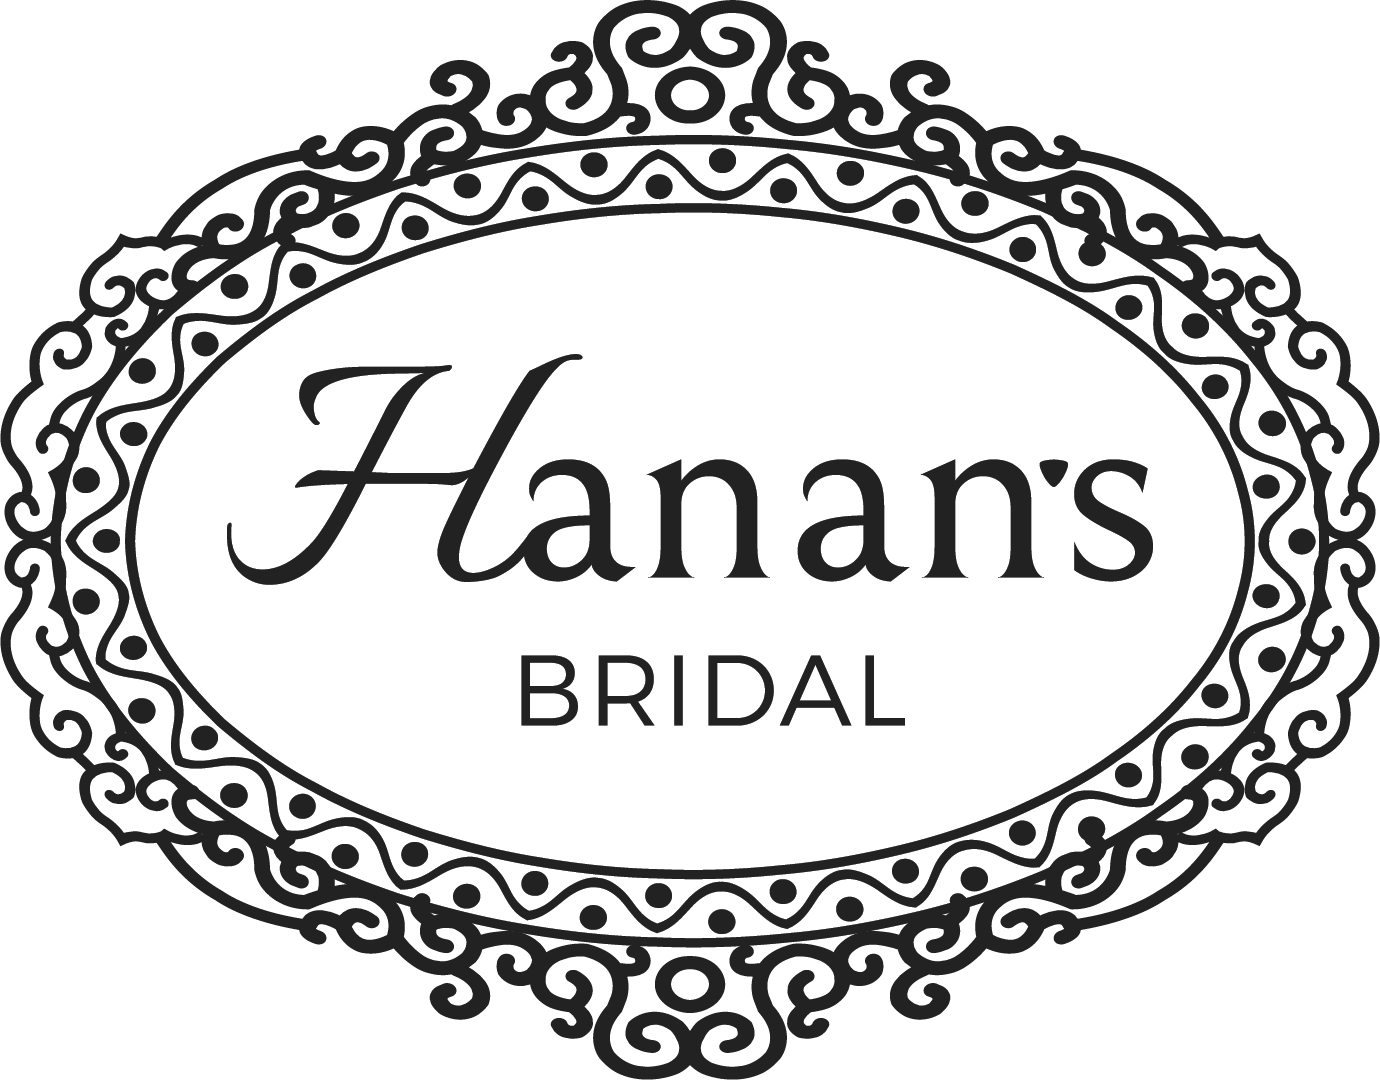 Hanan's Bridal